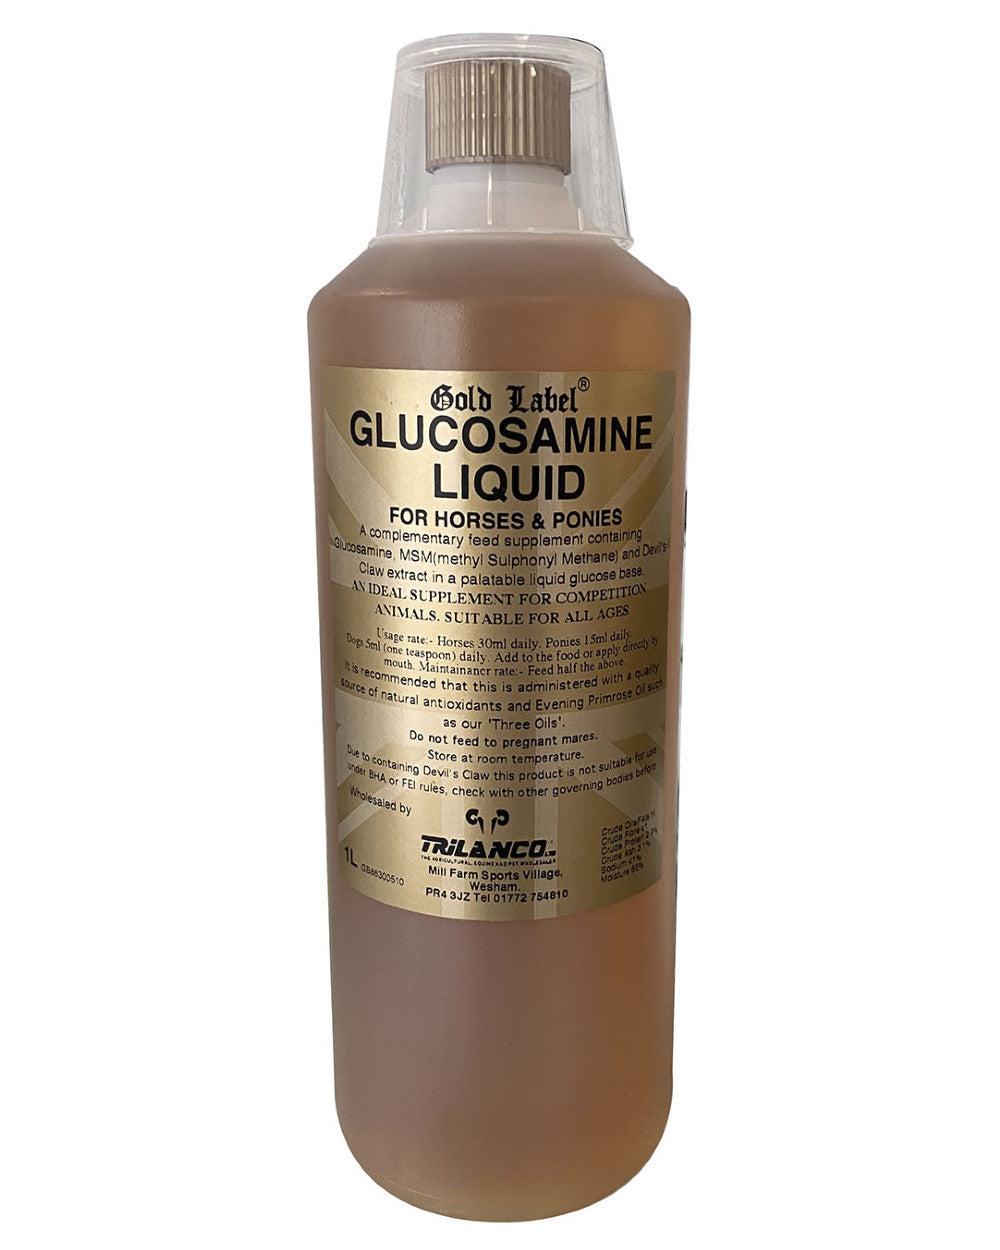 Gold Label Glucosamine Liquid On A White Background